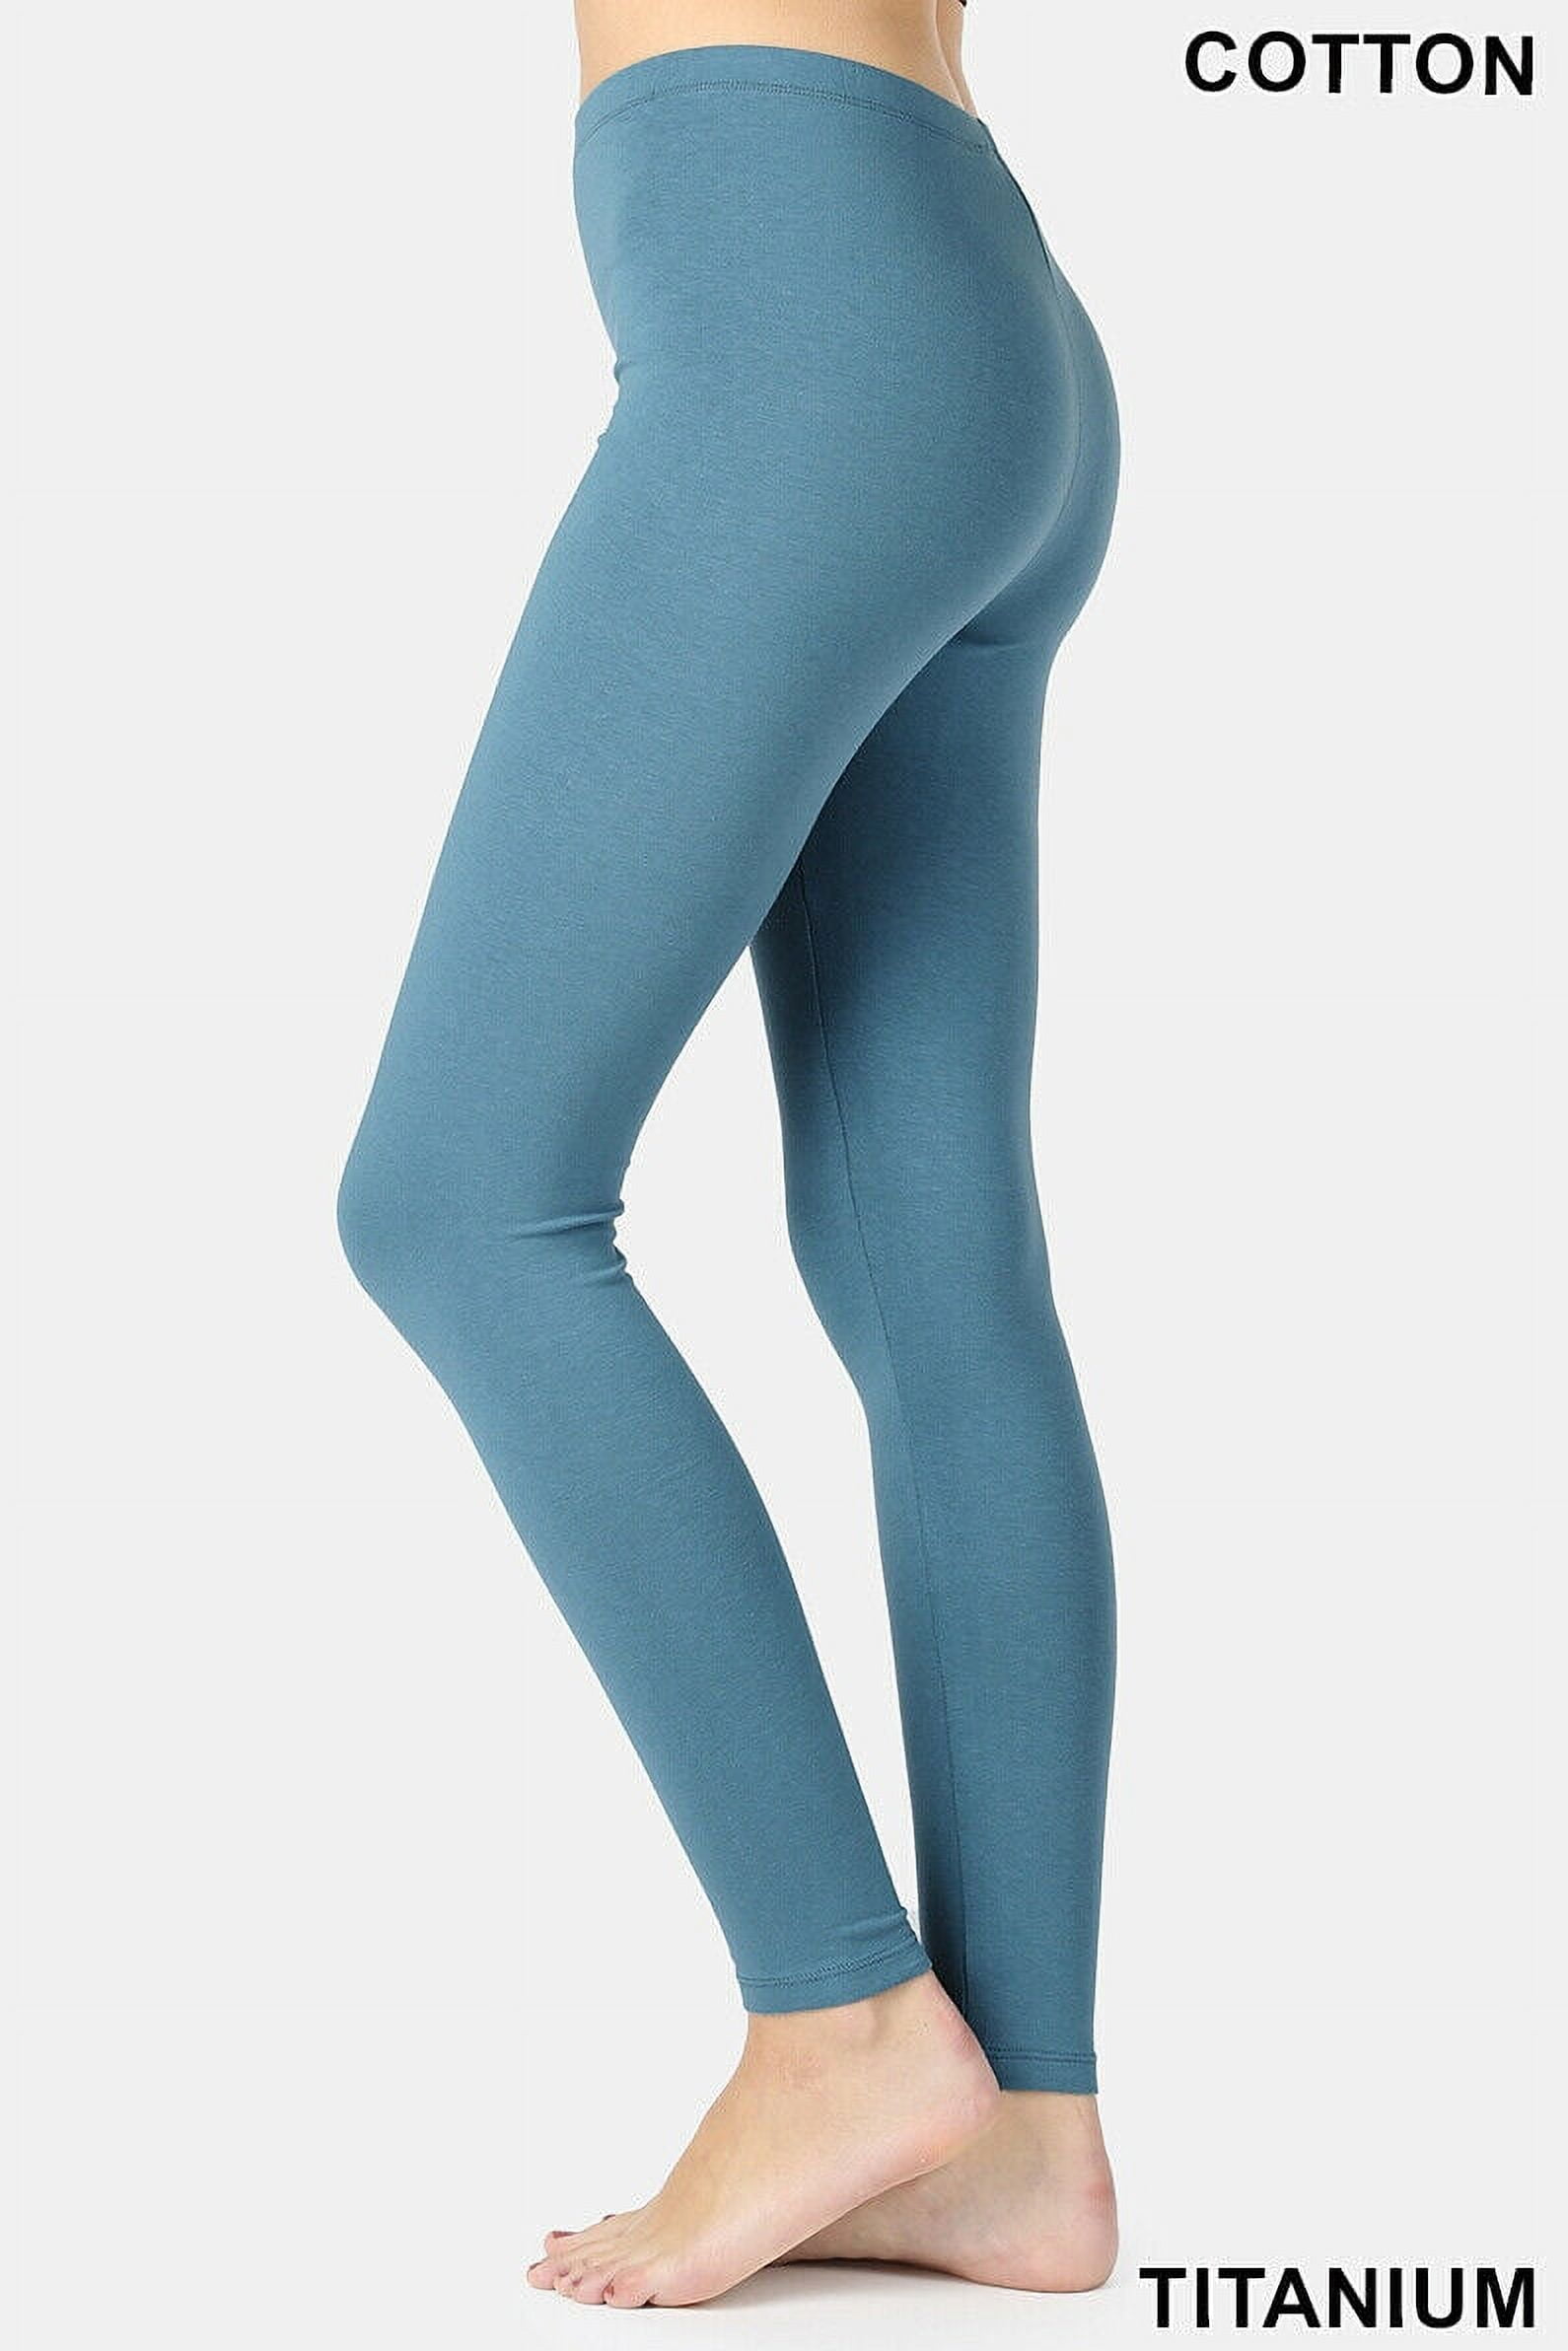 Zenana Premium Cotton Full Ankle Length Womens Basic Leggings - Multiple  Solid Colors Sizes S-3X